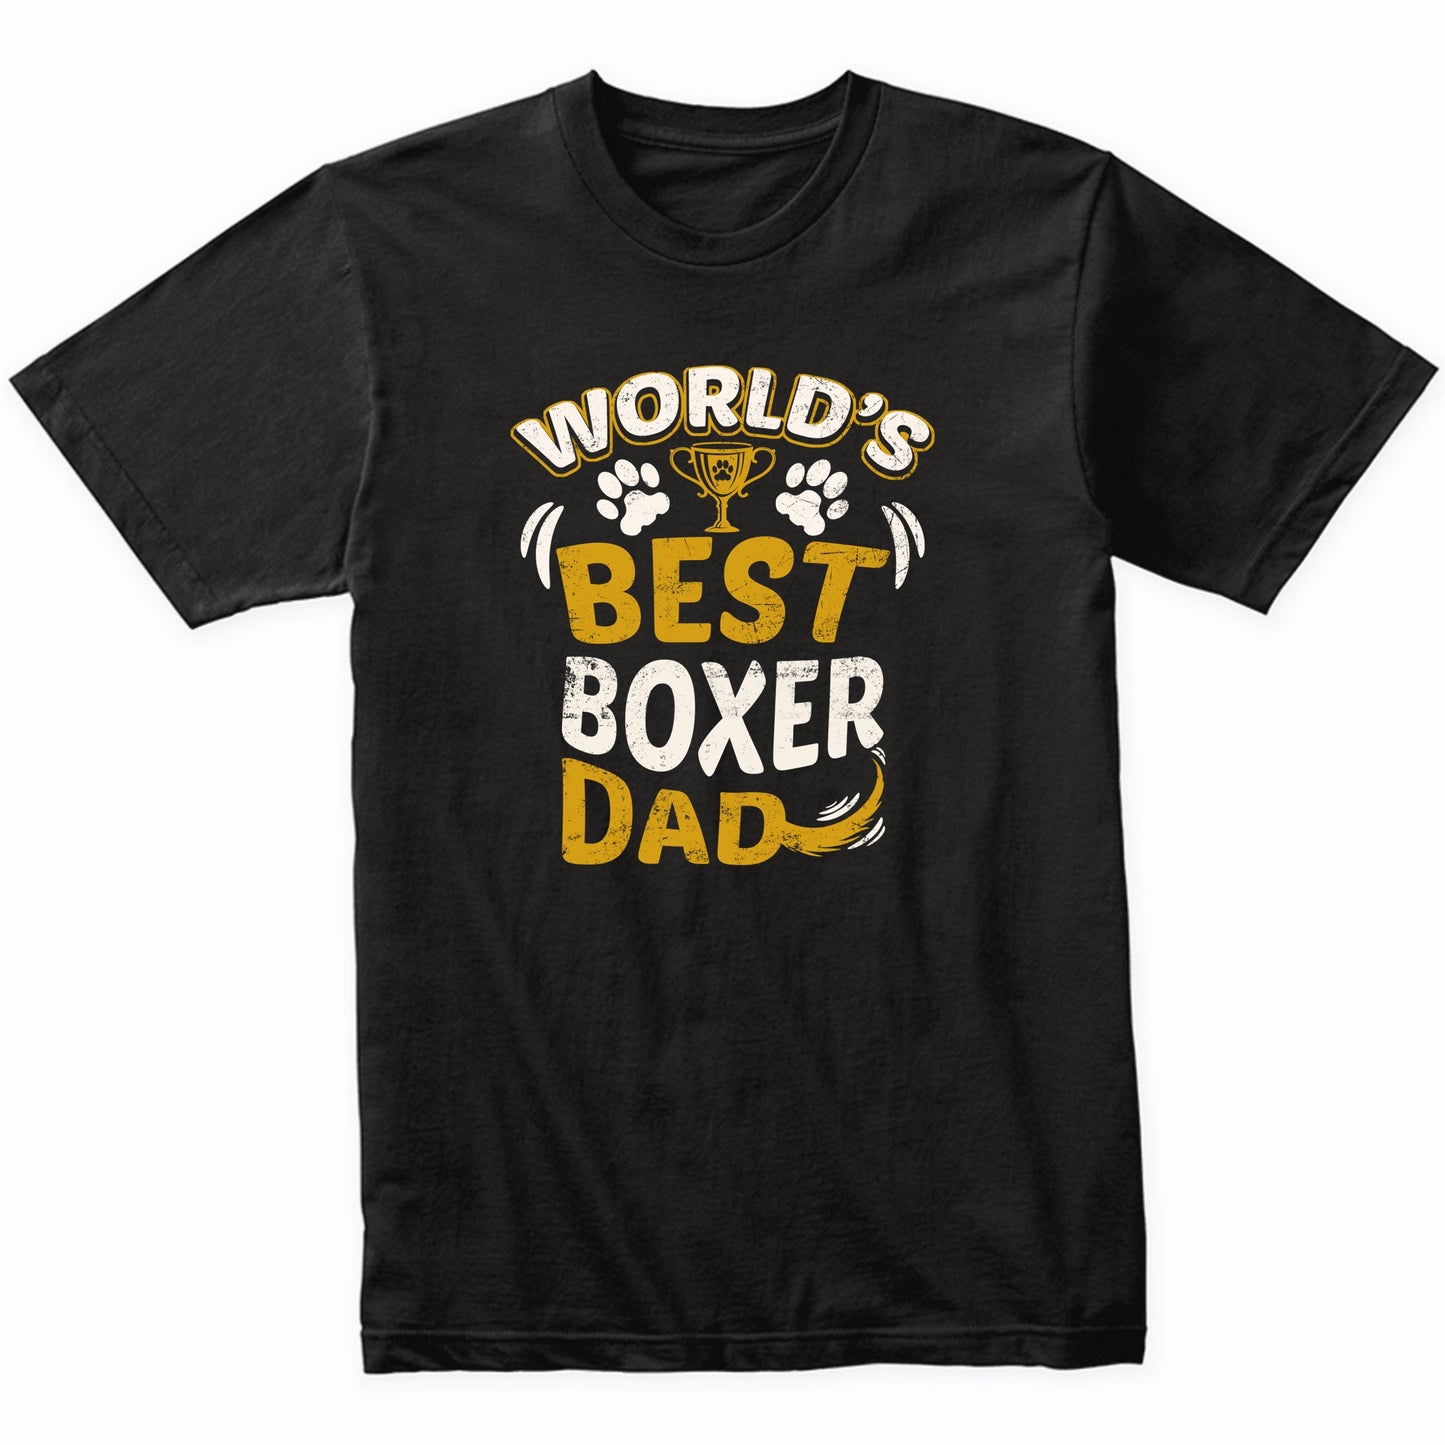 World's Best Boxer Dad Graphic T-Shirt